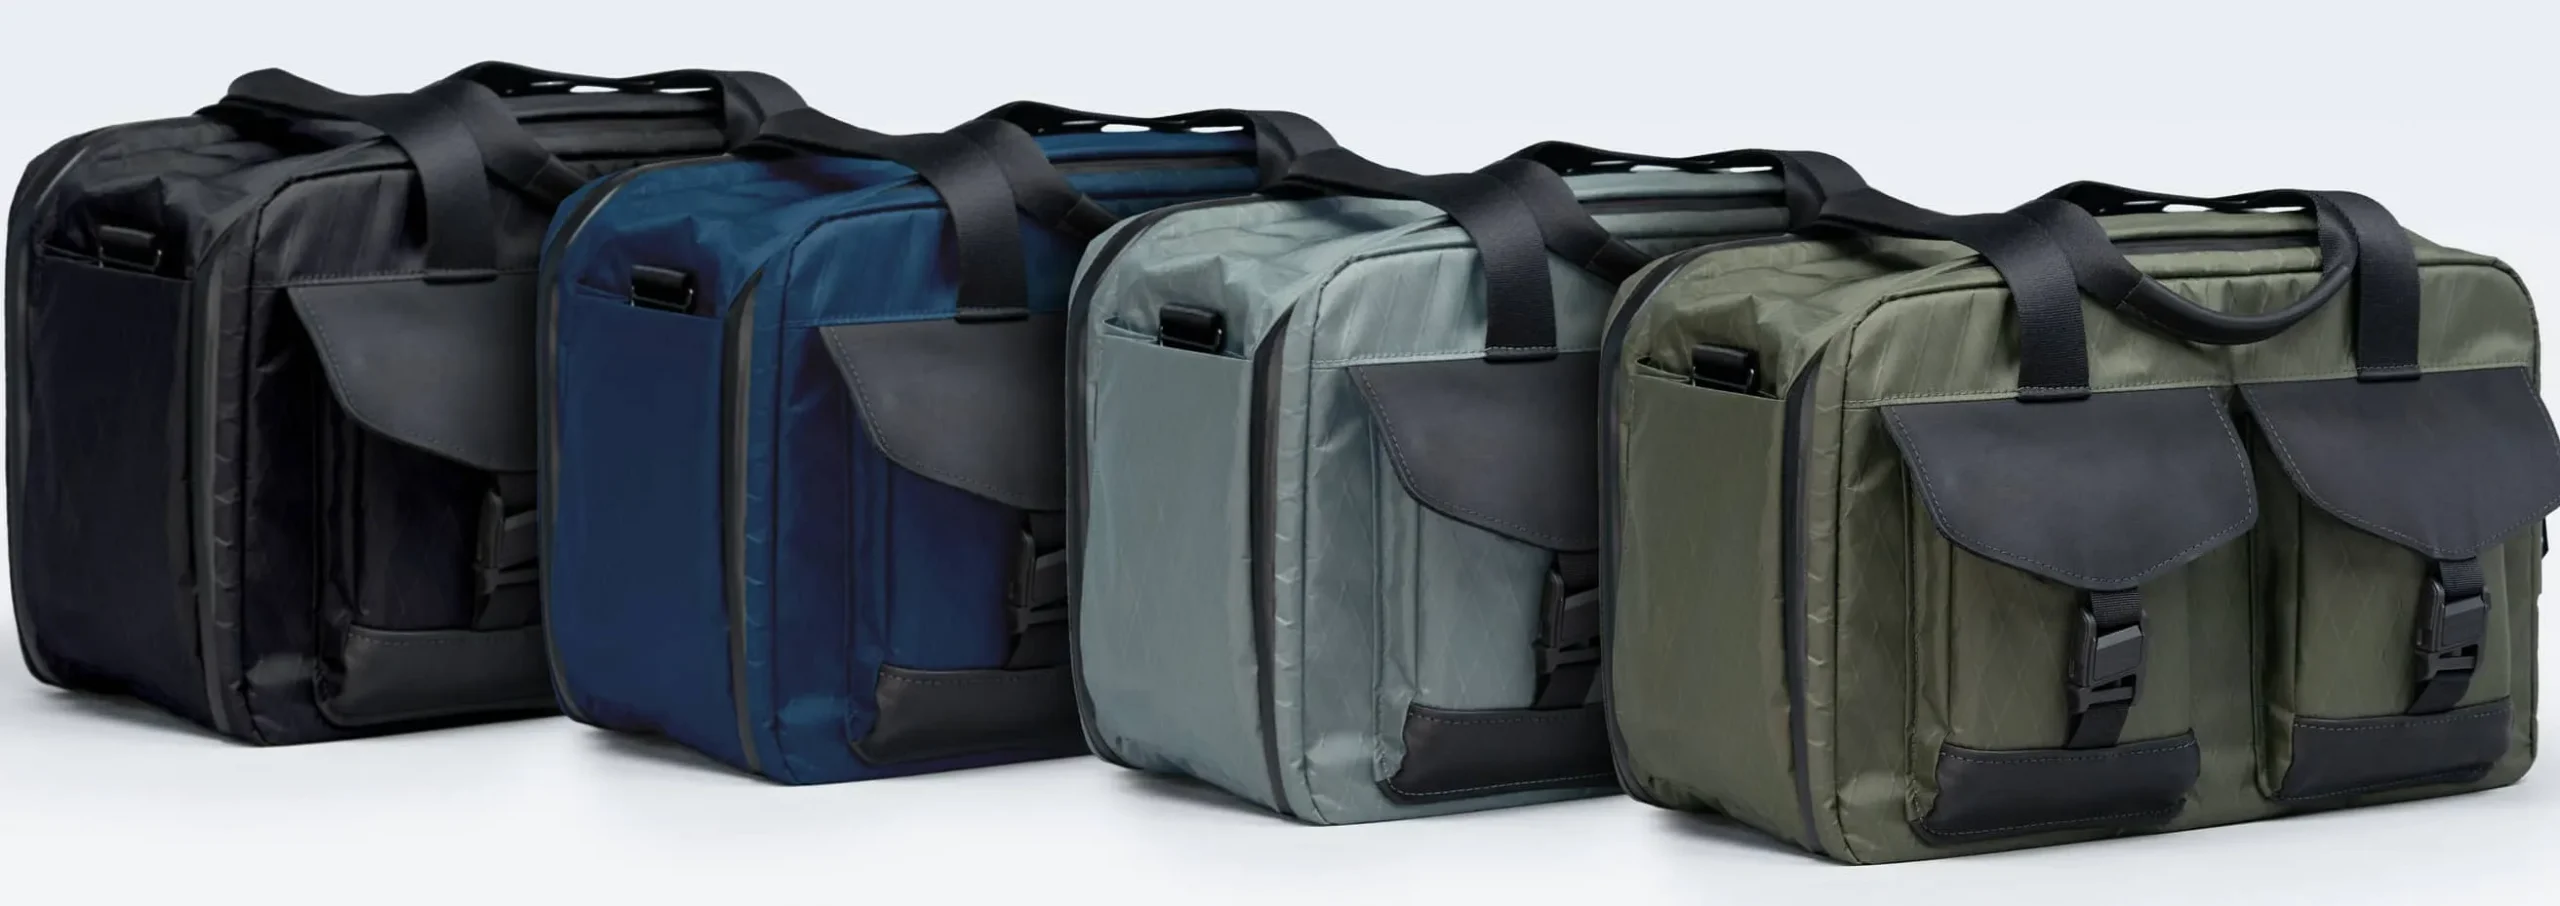 WaterField Designs X-Air Duffel 旅行袋系列顏色飾面